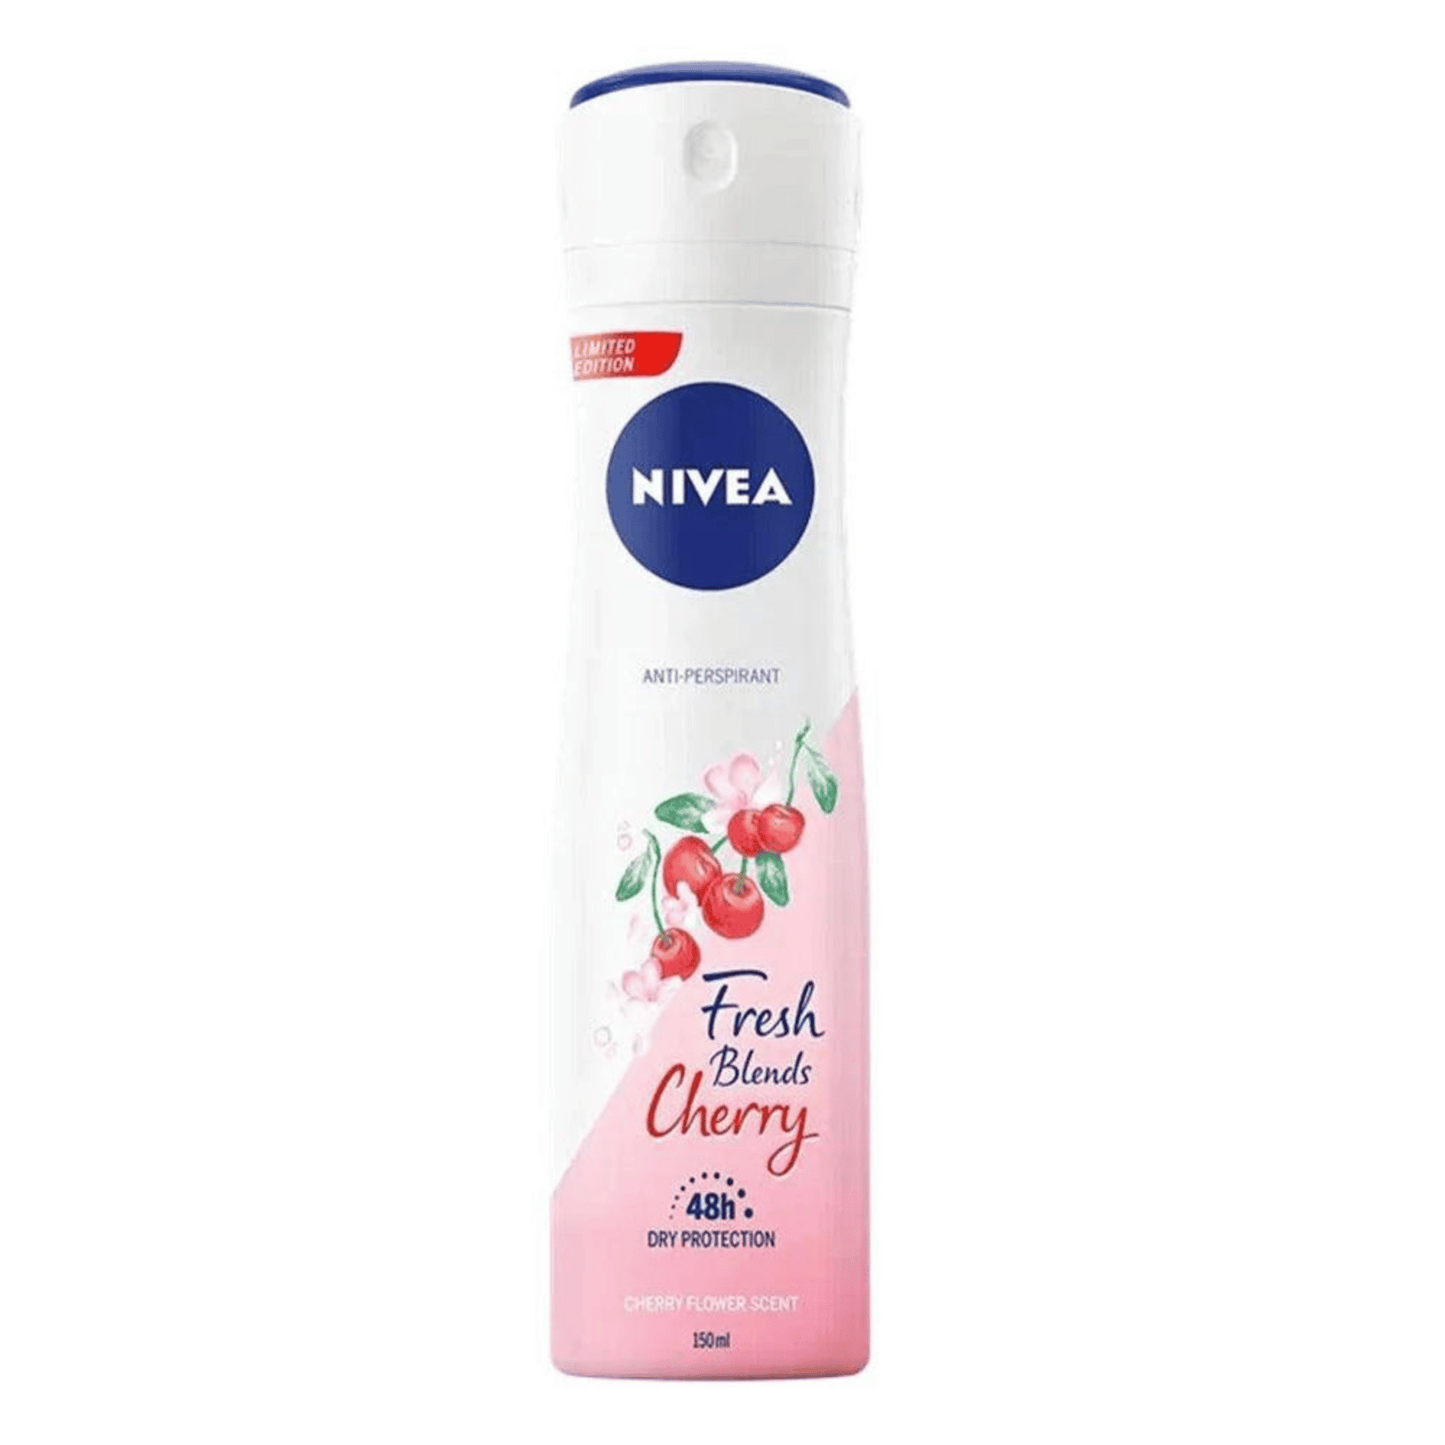 Primary Image of Women's Spray Fresh Blends Cherry Anti-Perspirant Deodorant